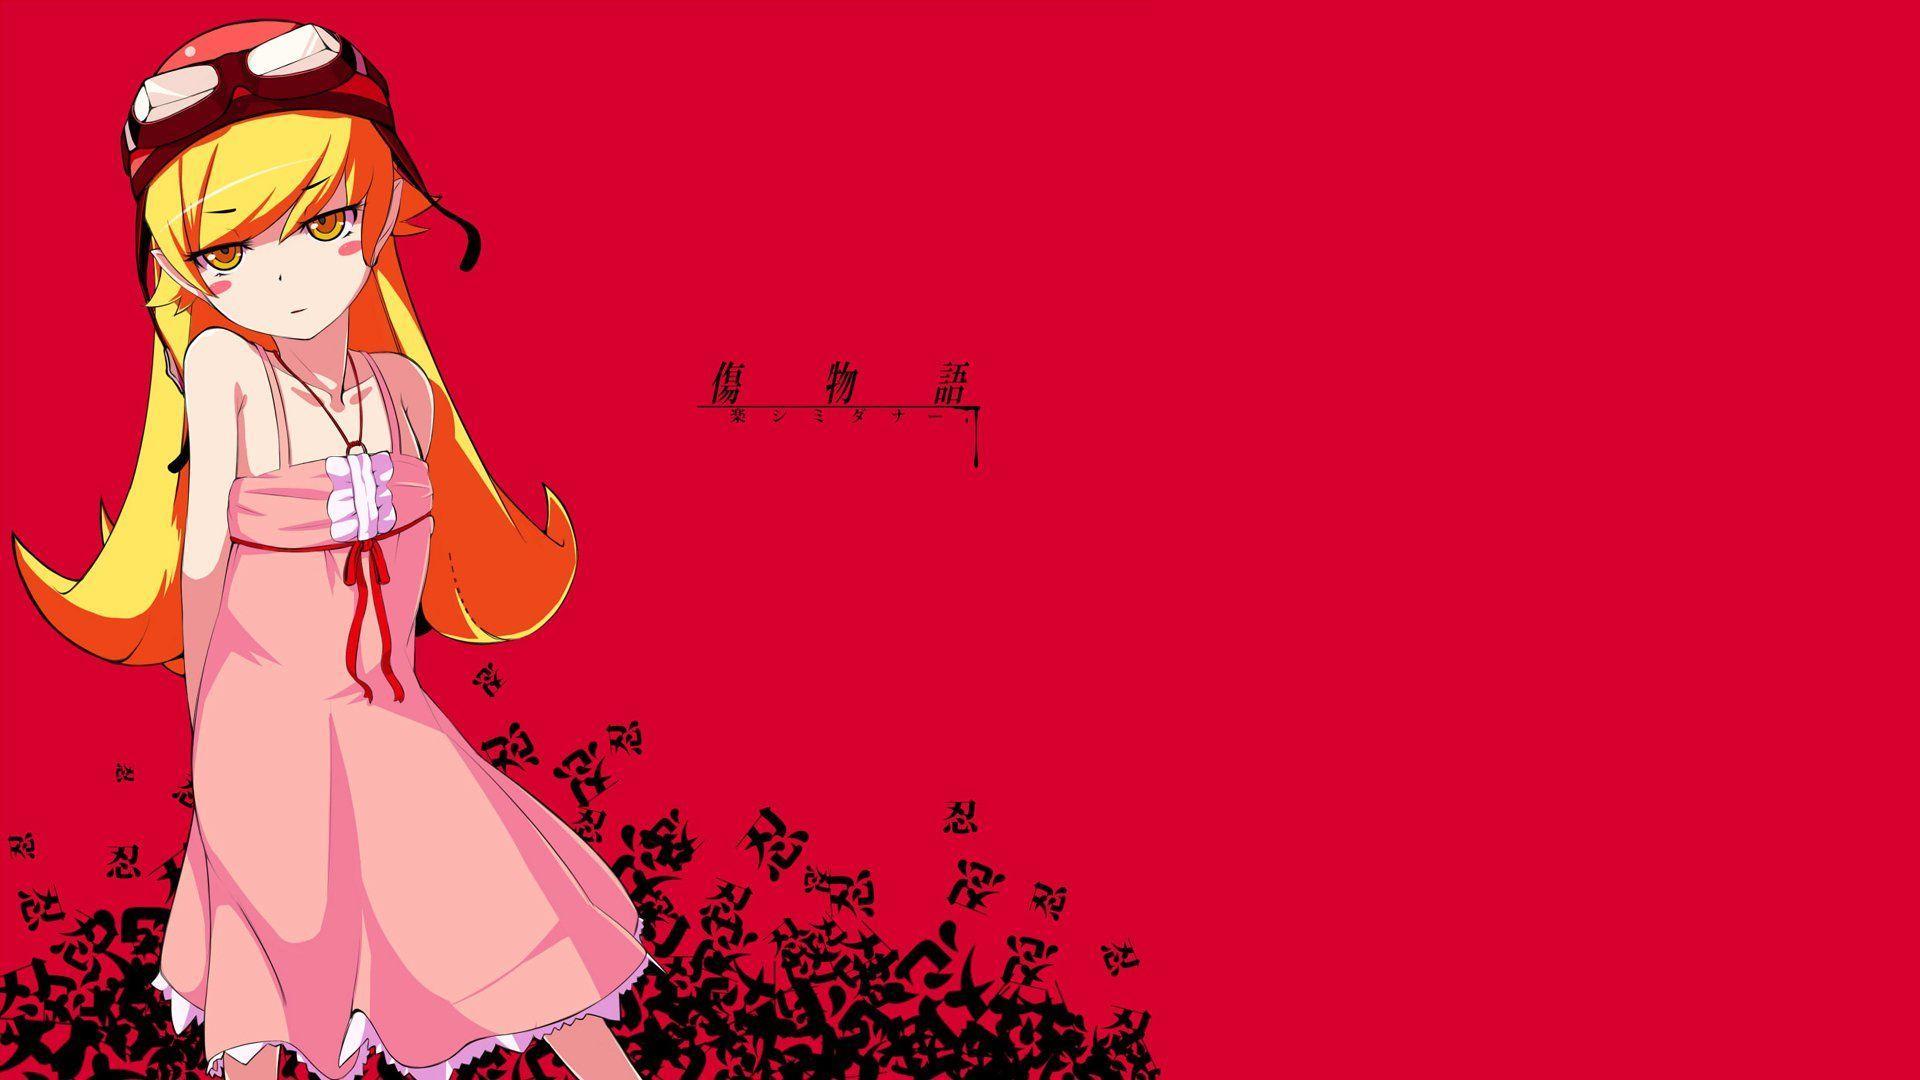 Monogatari Series Wallpaper For Ipad, Monogatari Series, Anime